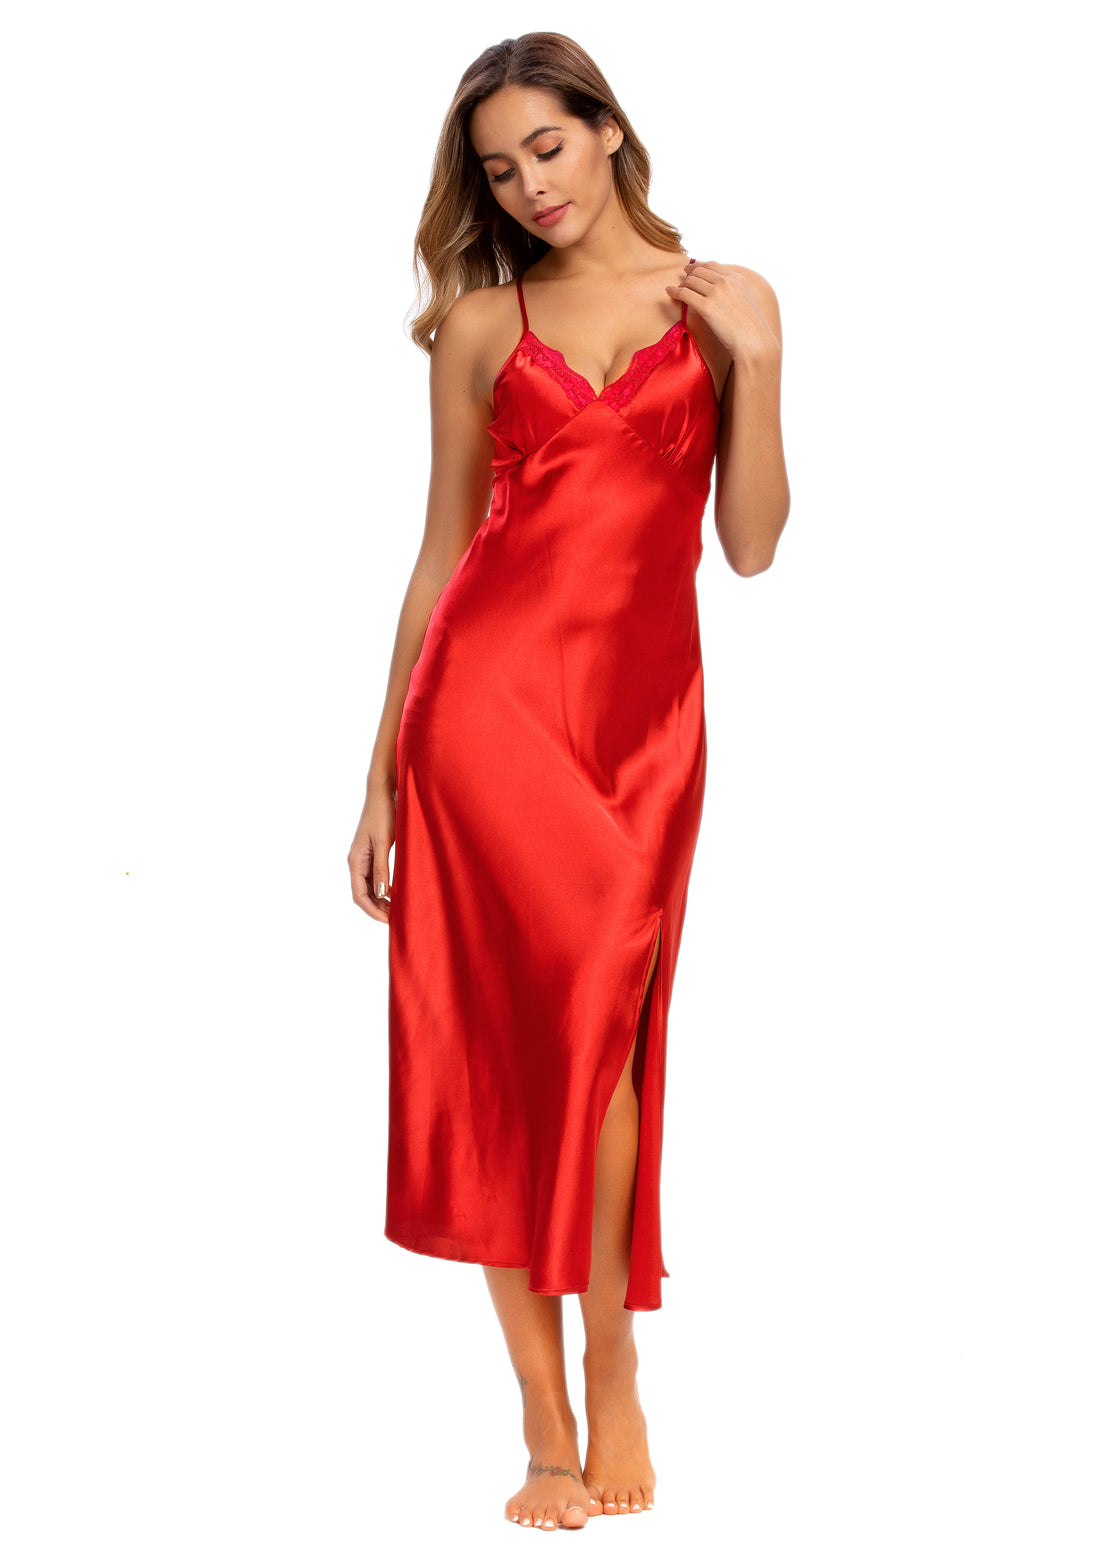 Sexy V-neck Nightgown Lace Lingerie Chemises Sleeveless Sleep Dress For Women Elegant Red